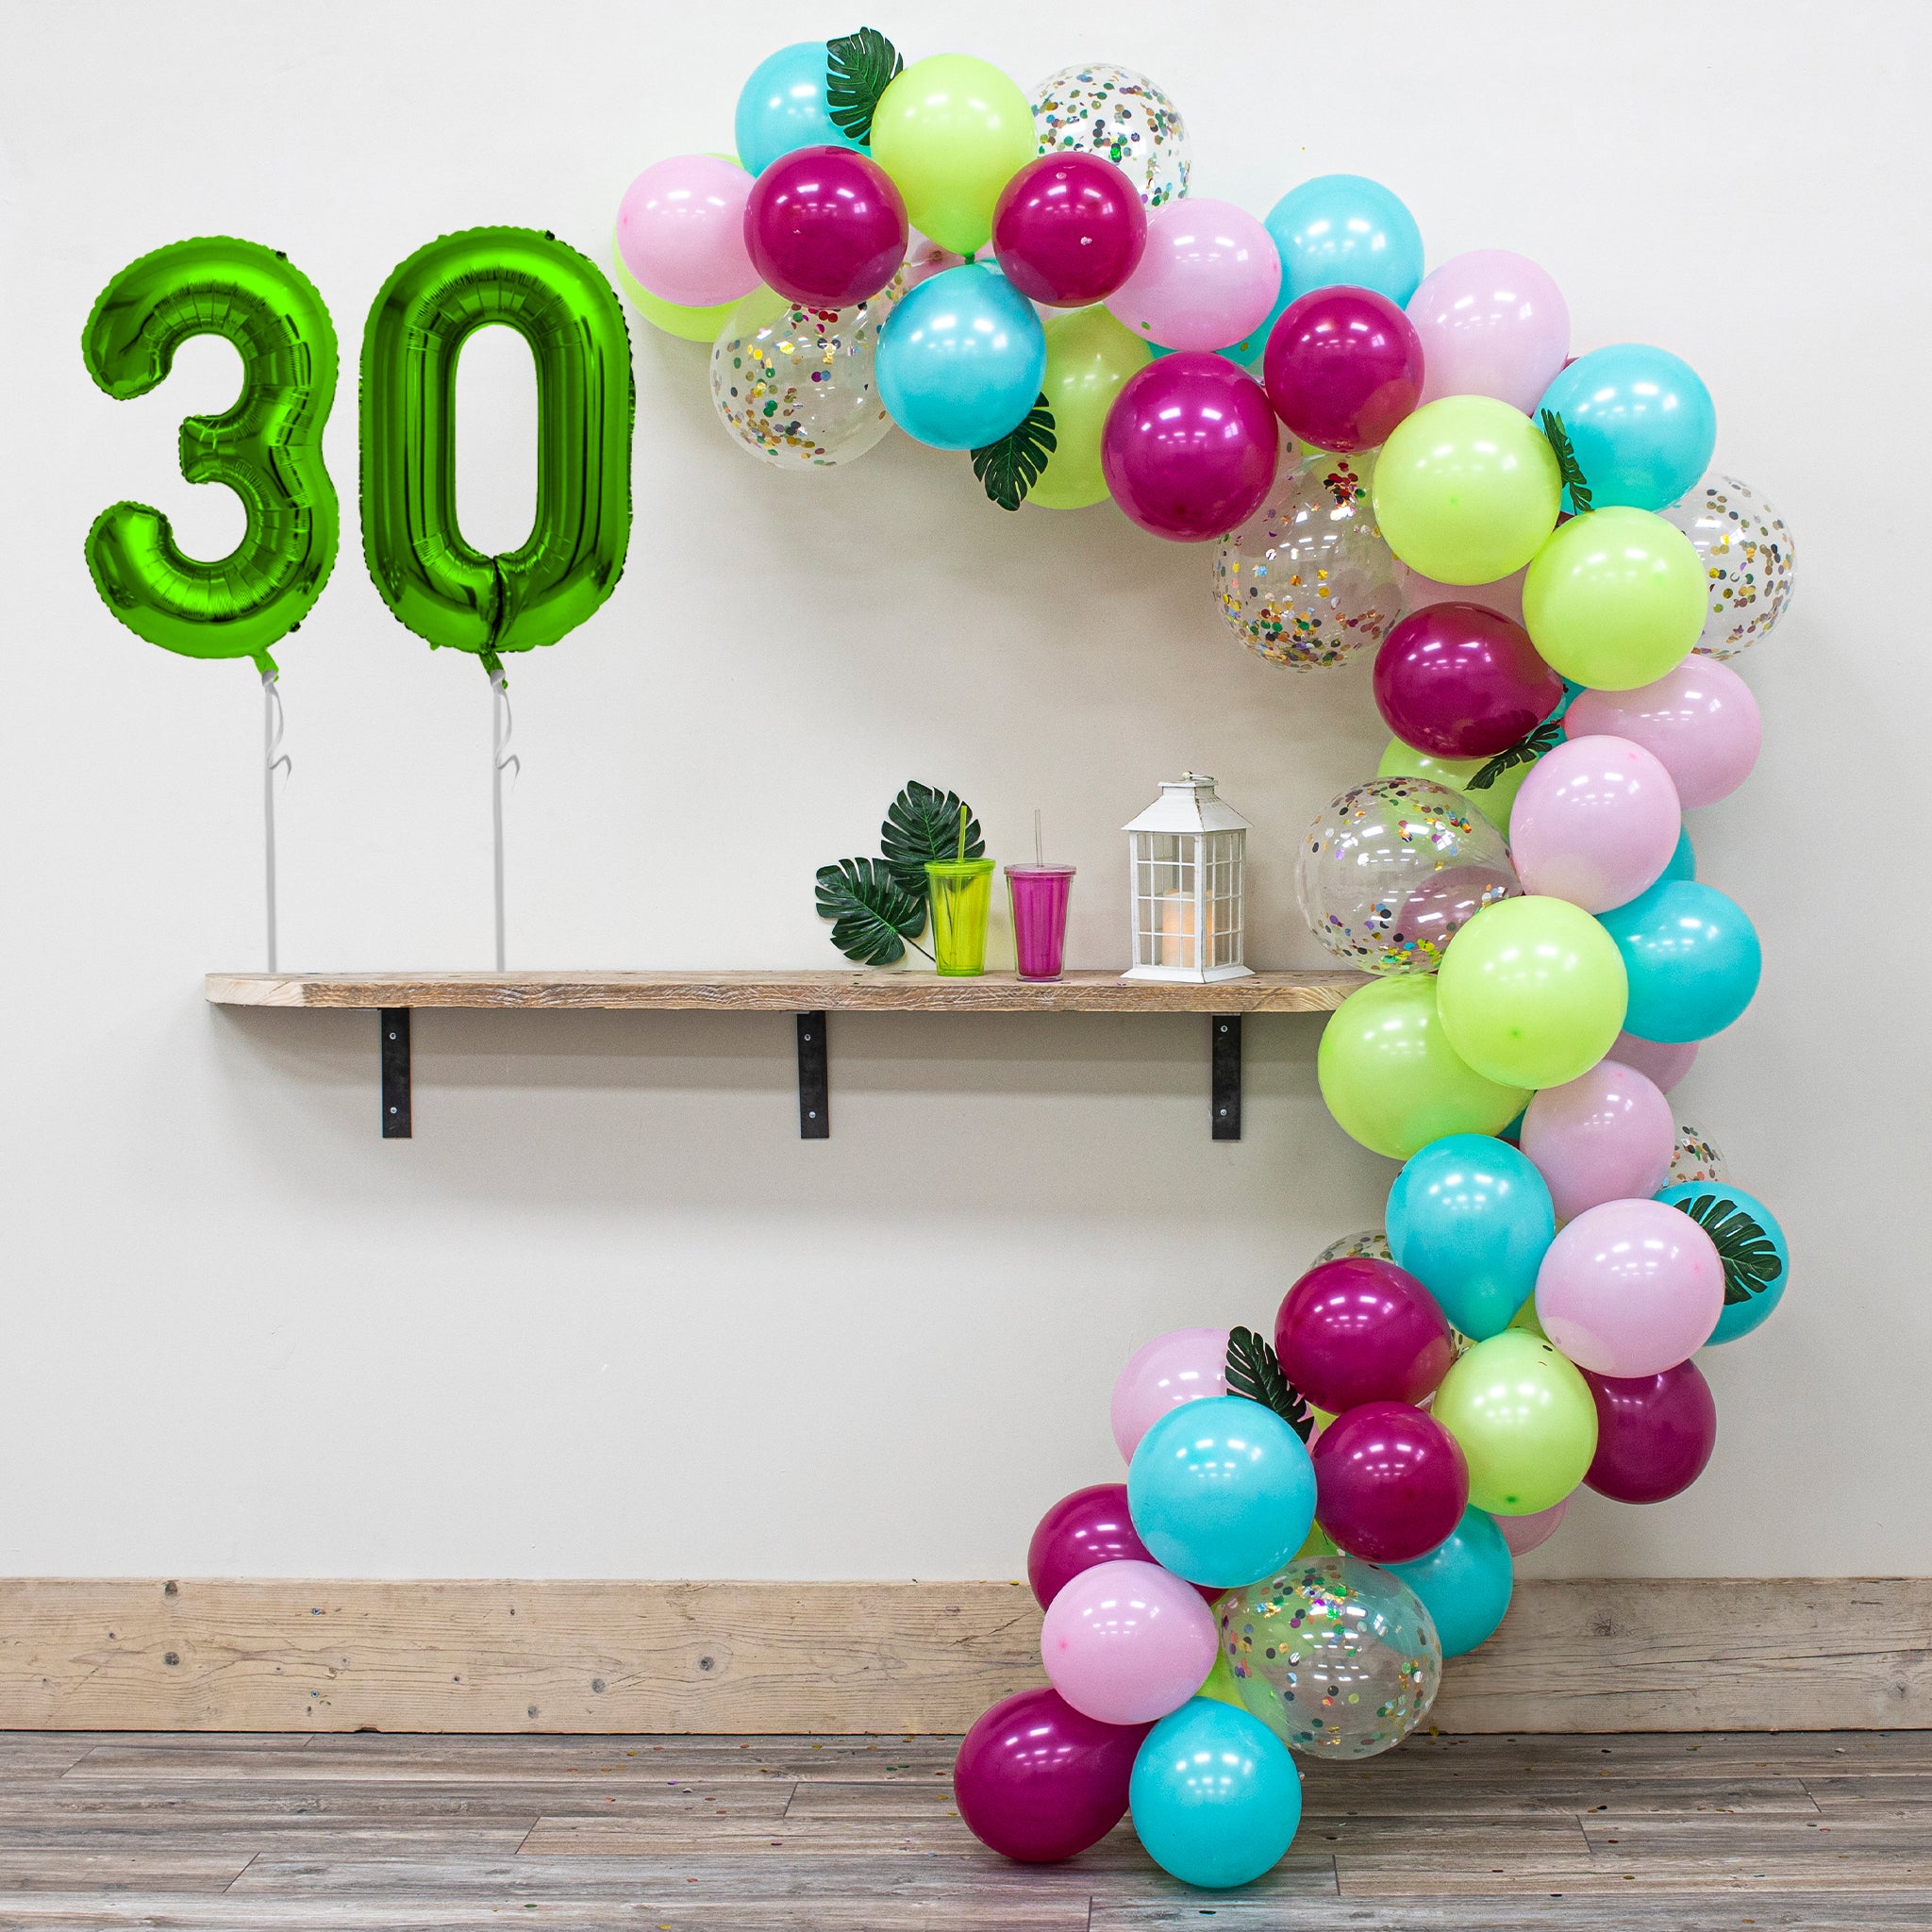 30th Birthday Hawaiian Tiki Party Balloon Arch Decoration Kit - Includes 70+ Balloons